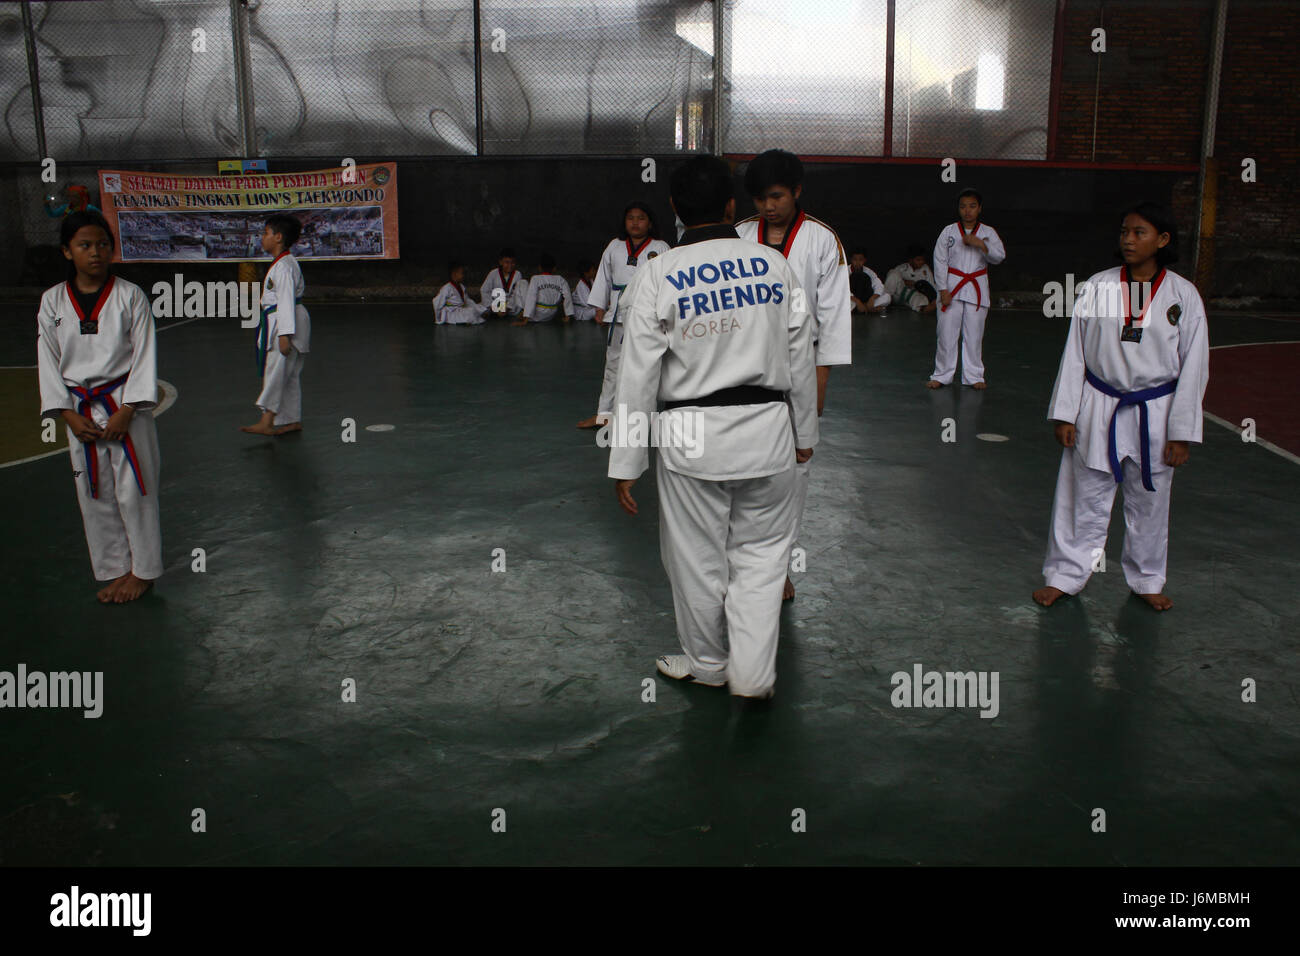 Gambar Taekwondo Indonesia